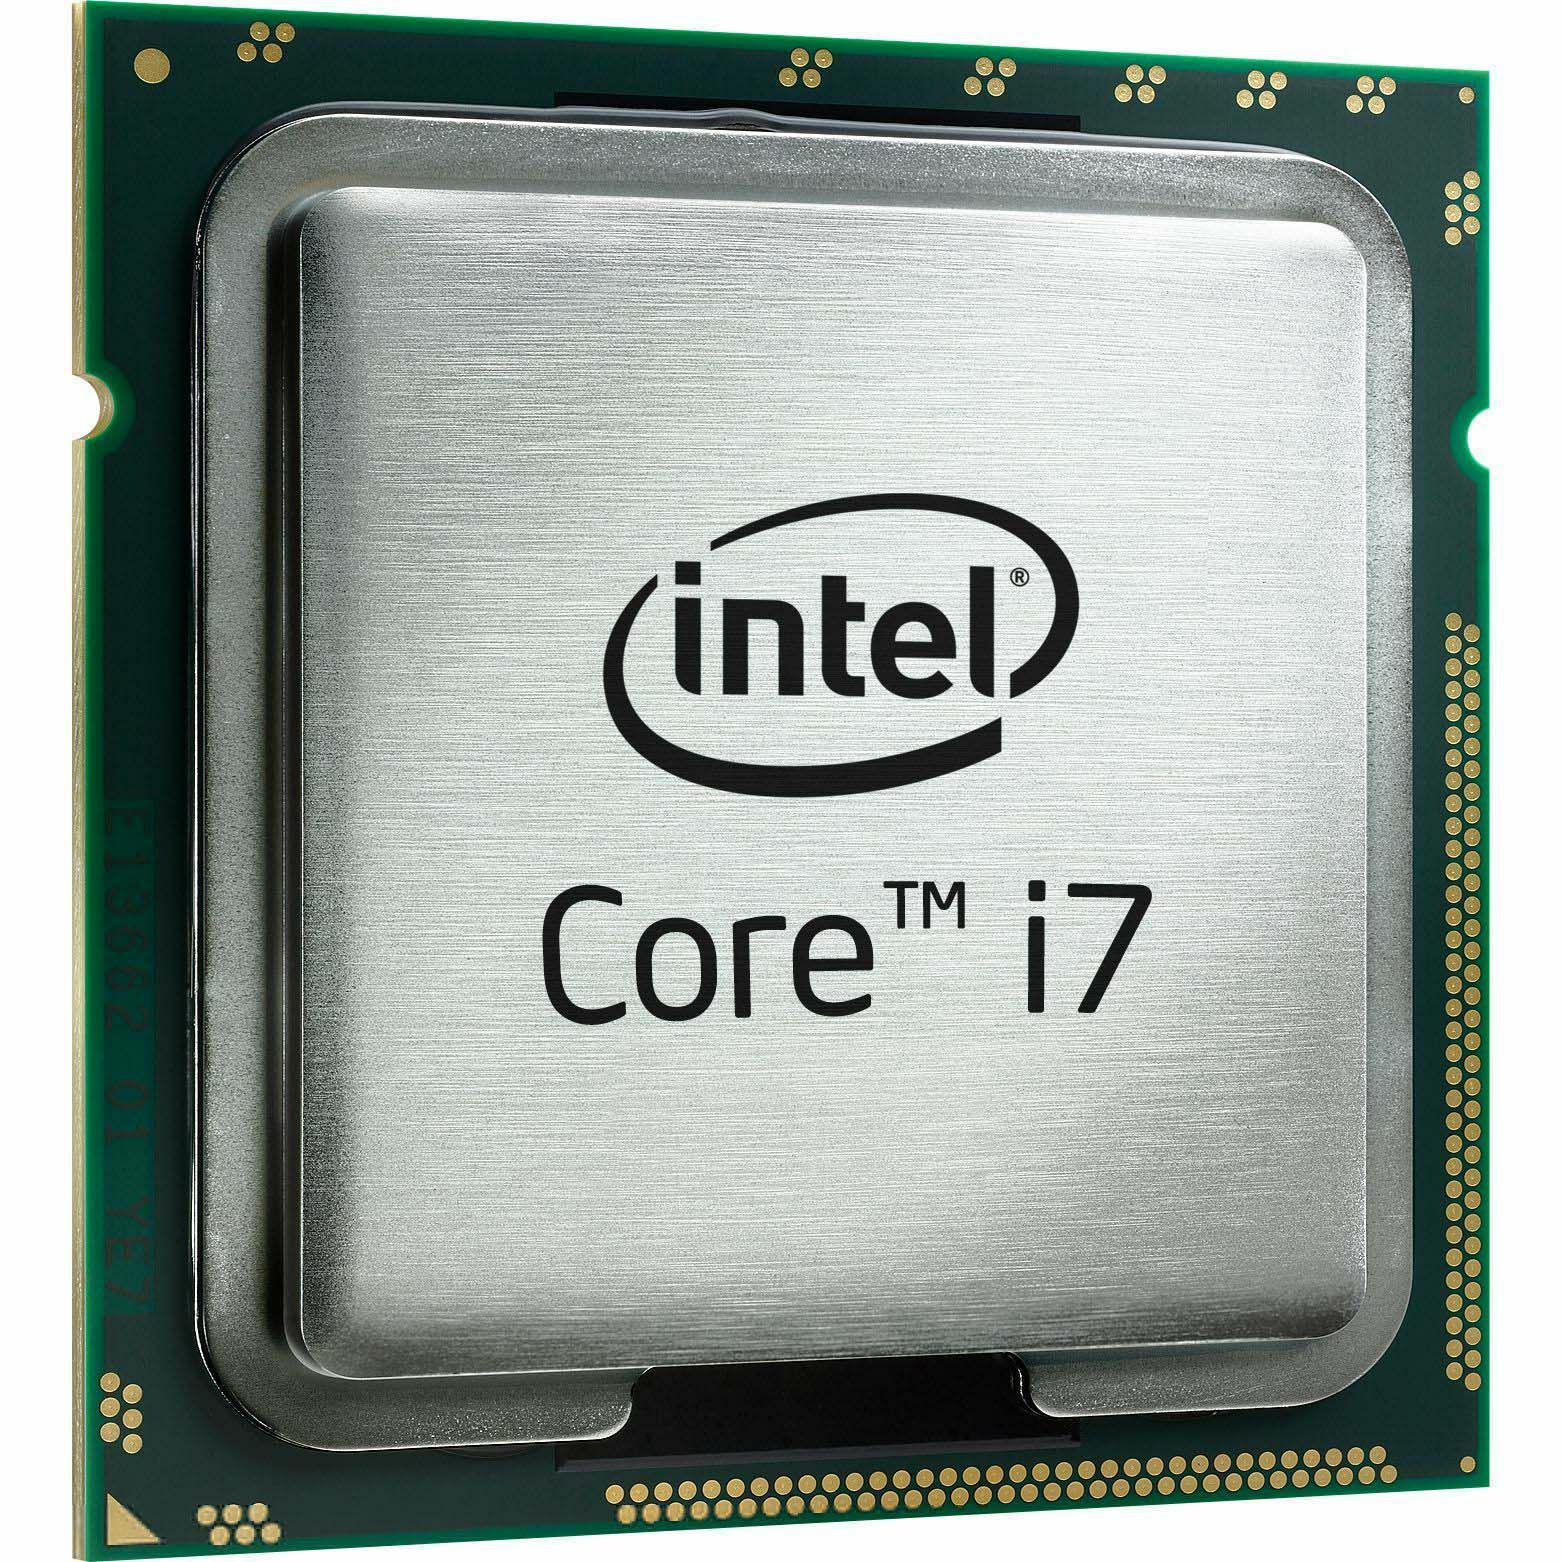 Intel Core I7 Extreme Edition I7 900 I7 990x Hexa Core 6 Core 346